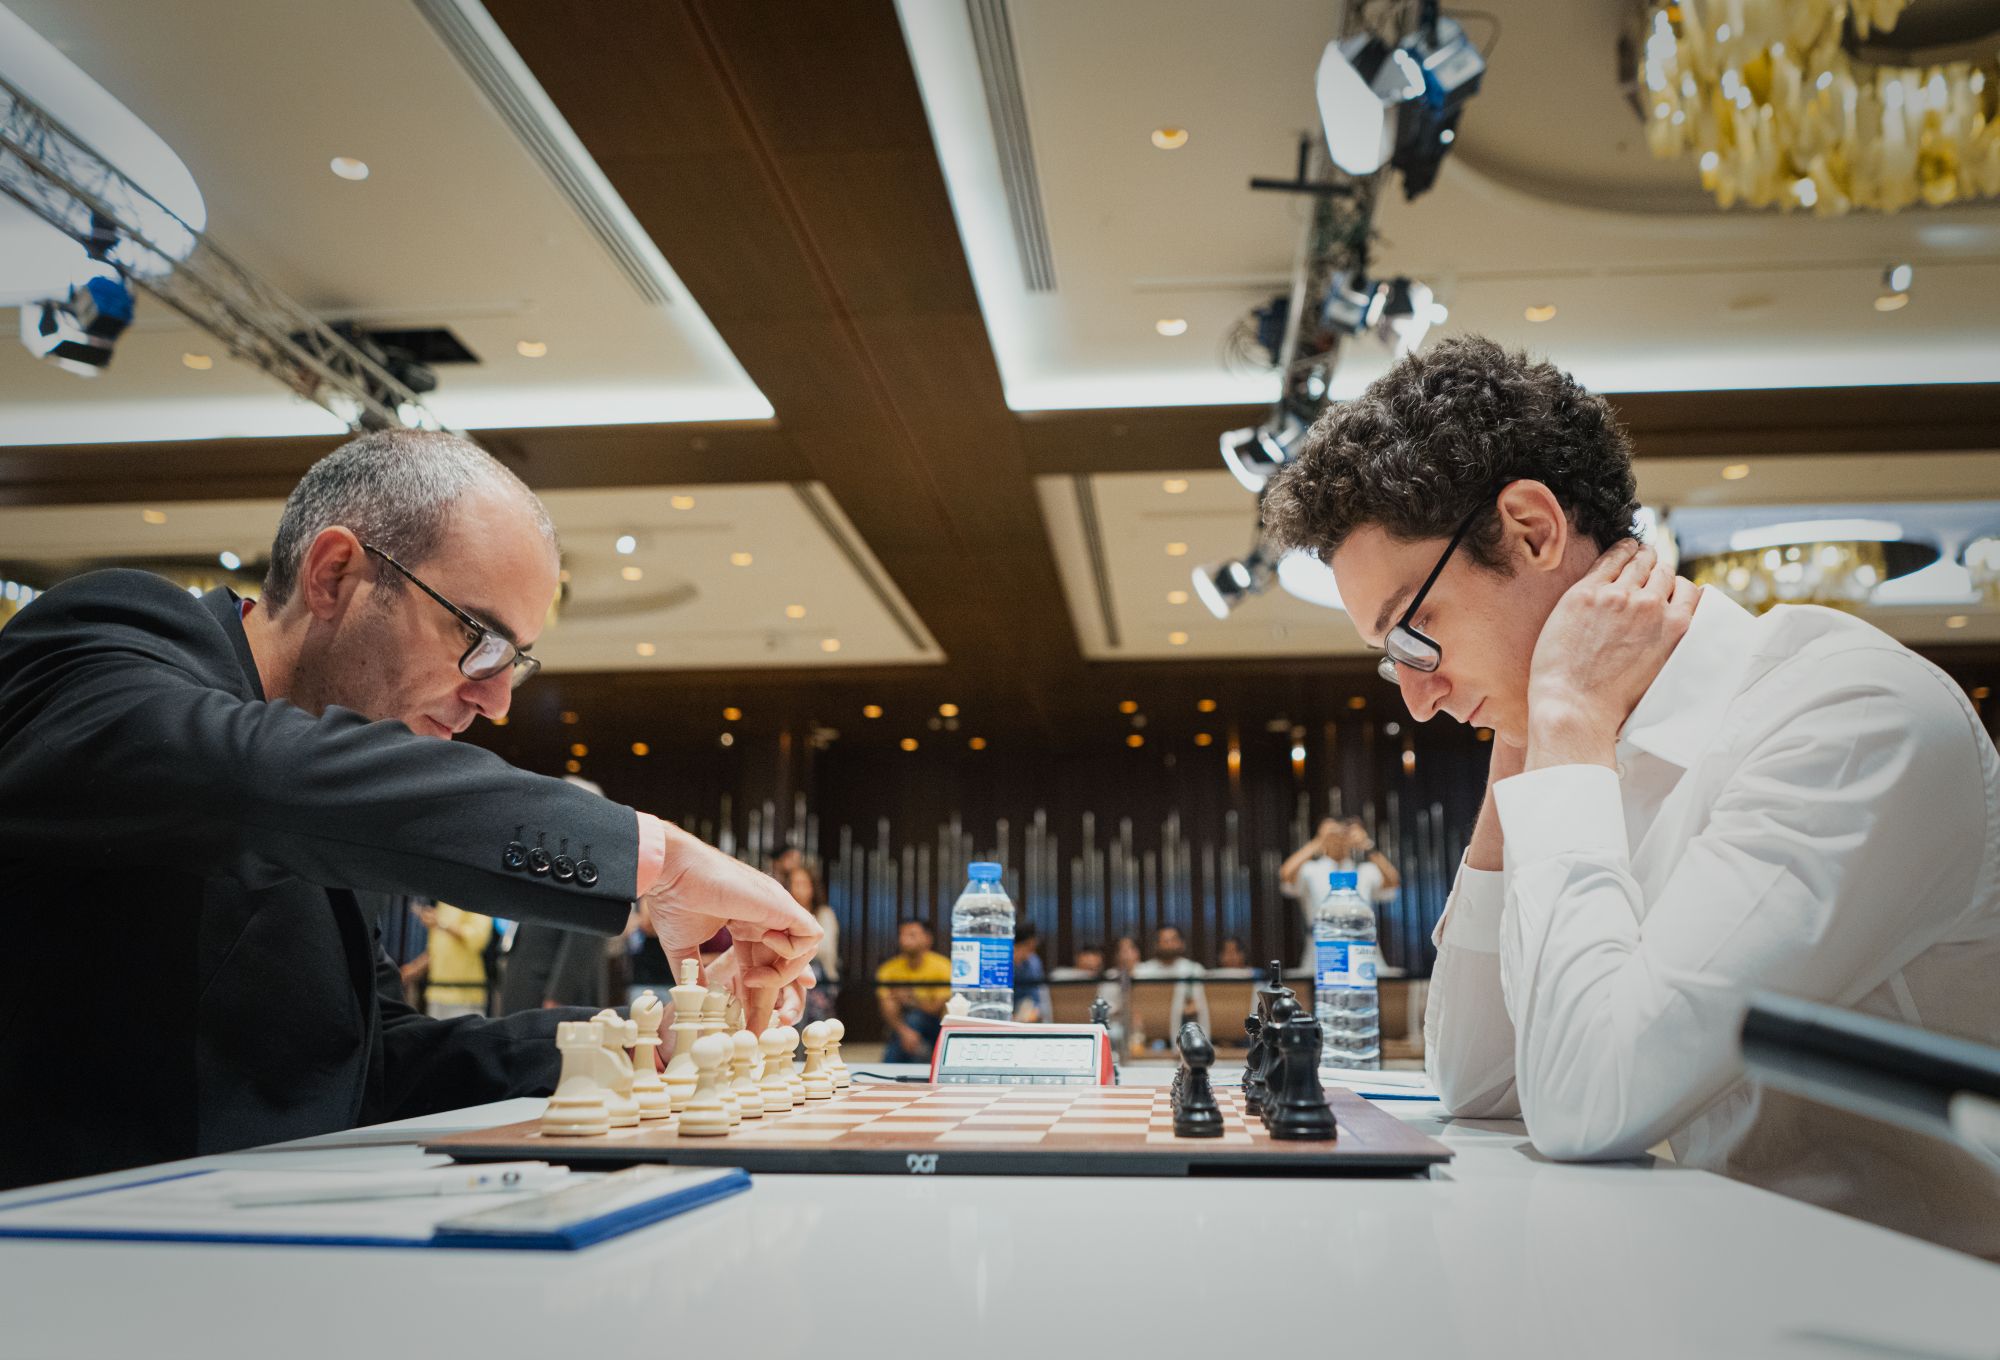 Norway's Magnus Carlsen wins FIDE World Cup 2023 in Baku - AZERTAC